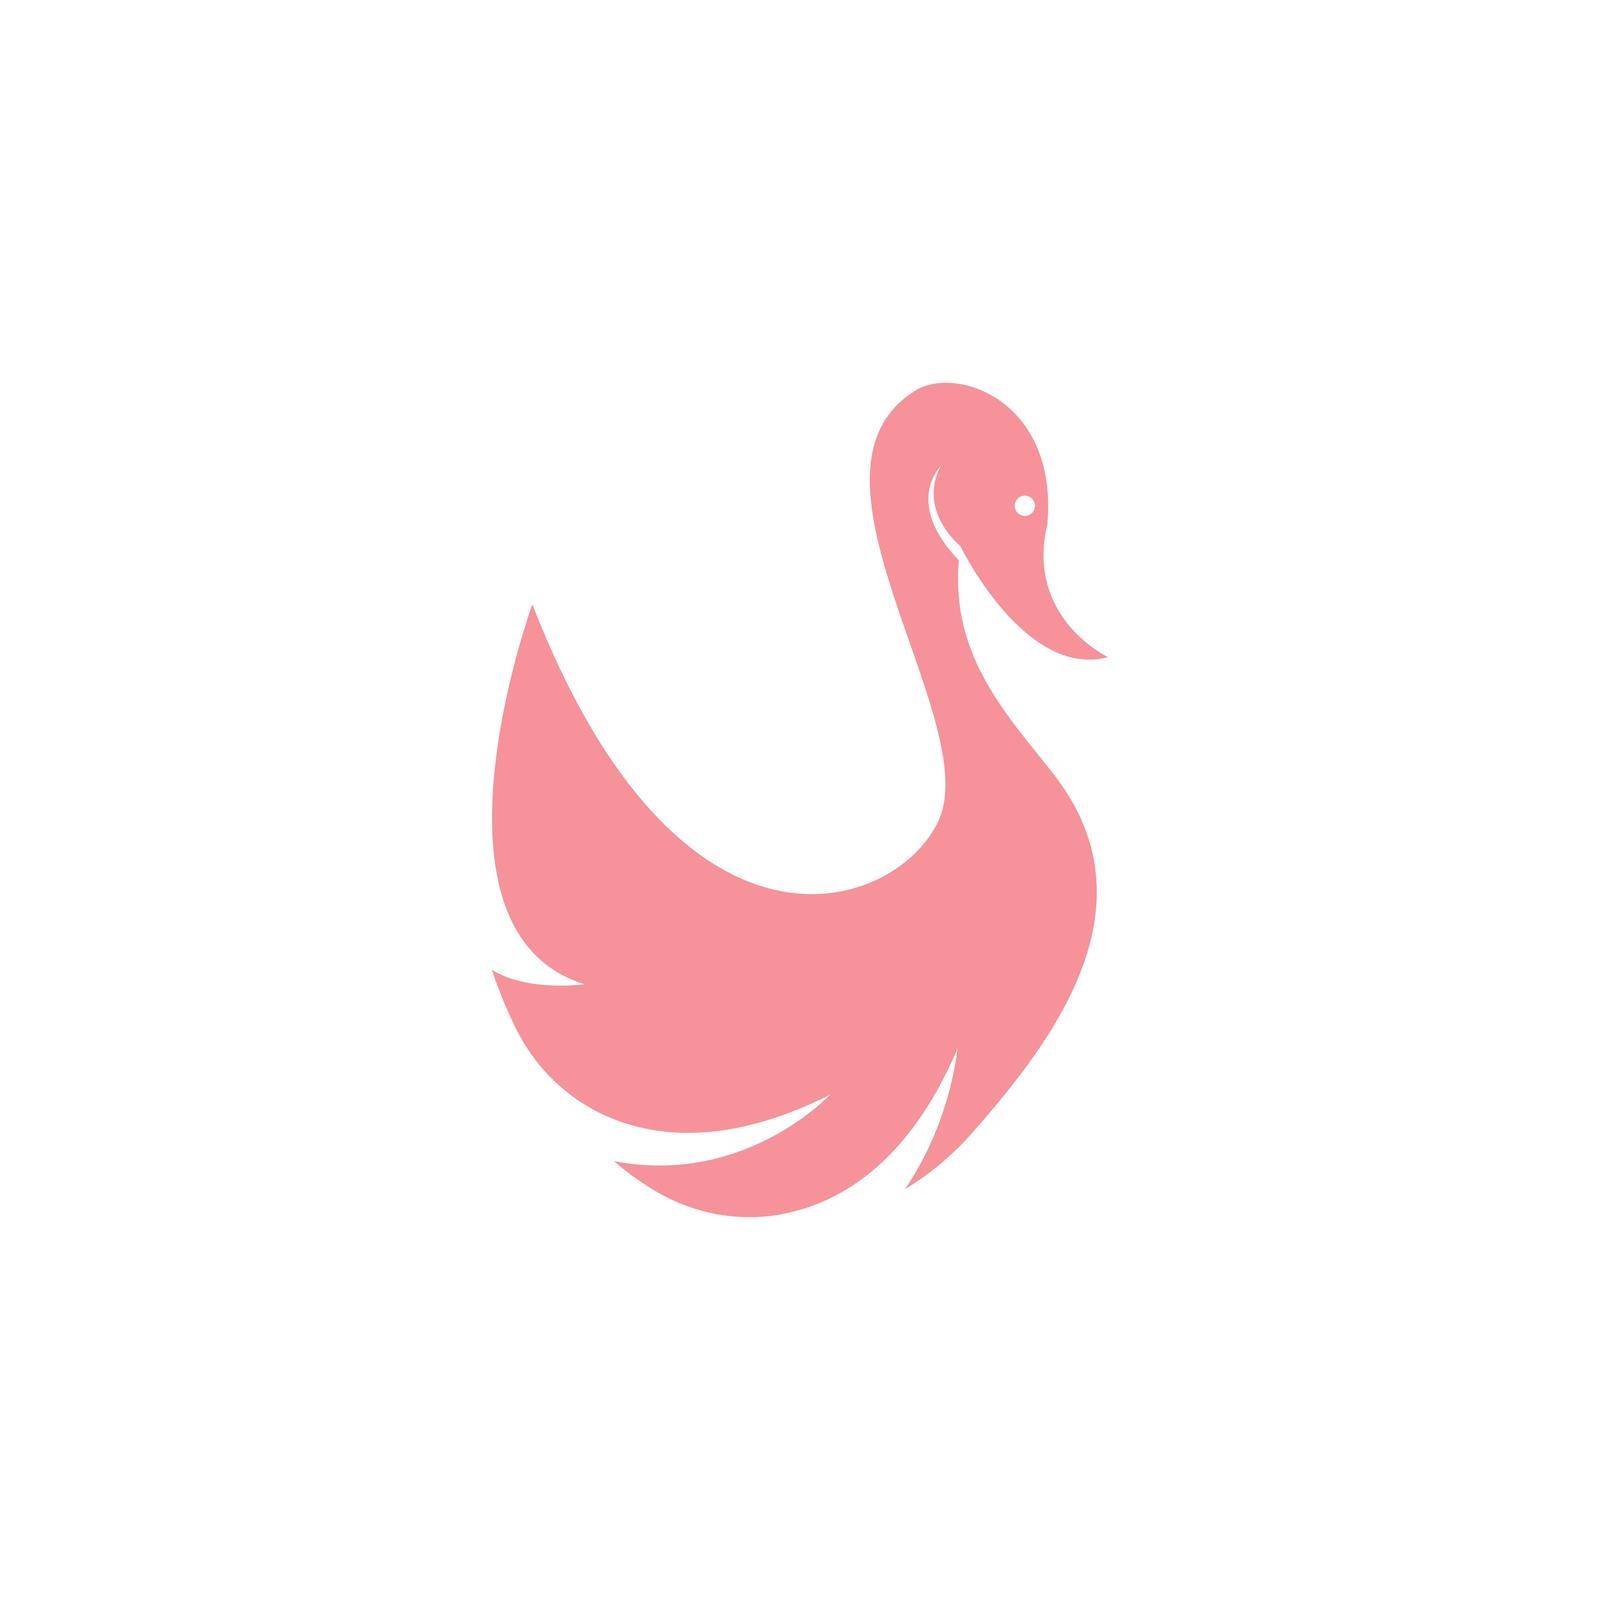 Swan illustration logo design template